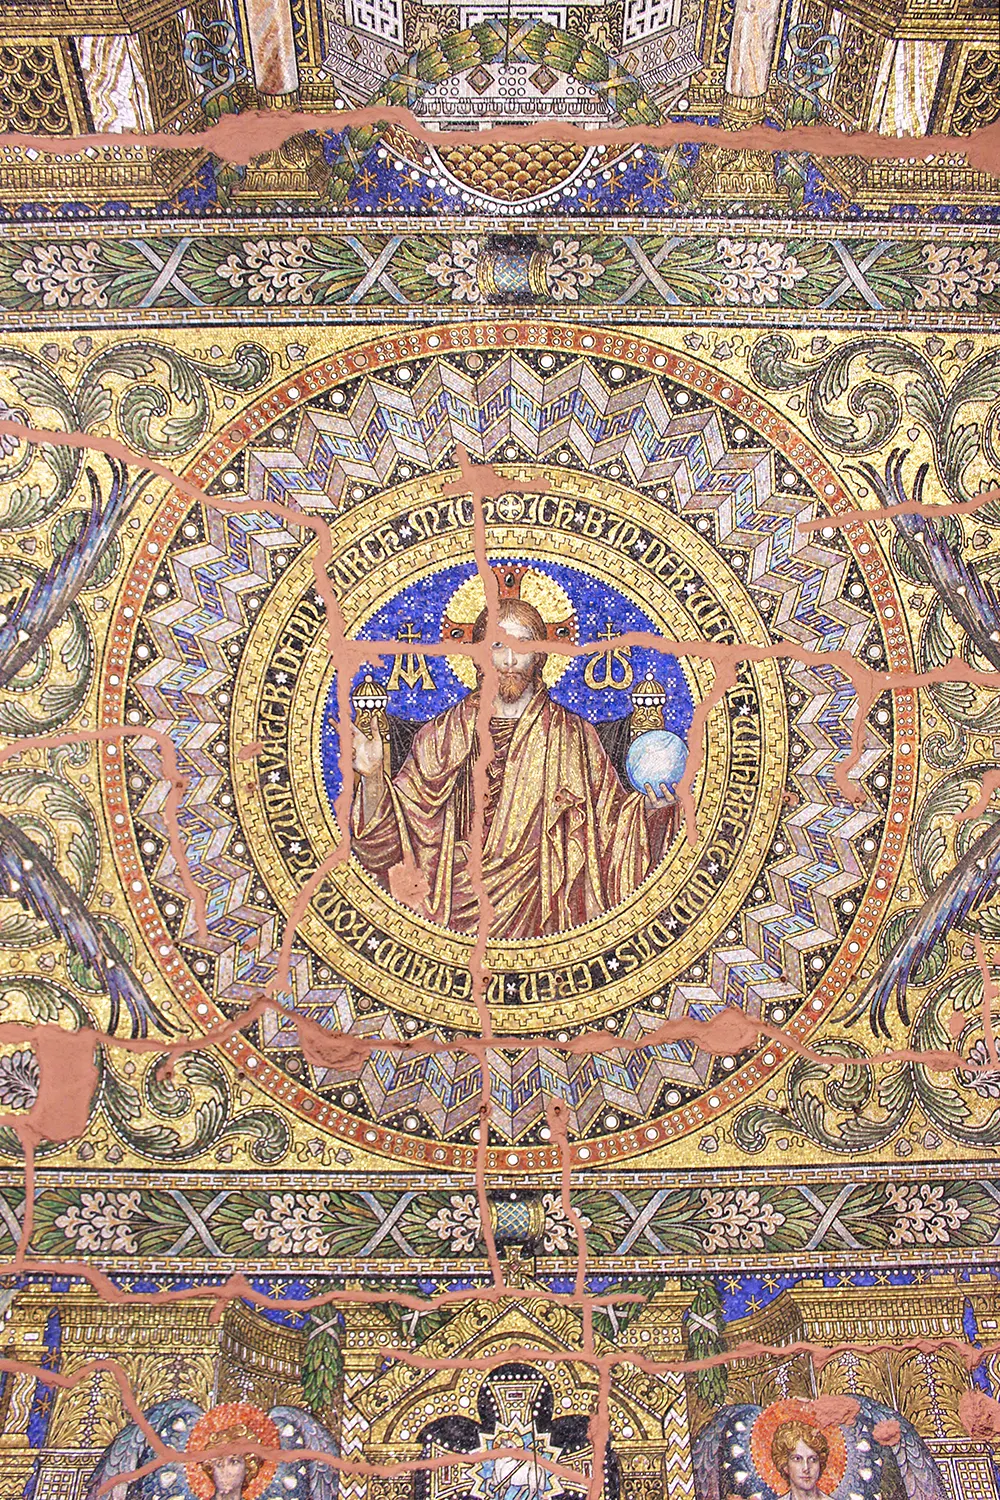 Gold mosaic tiles at the Kaiser Wilheim Memorial Church in Berlin - travel & lifestyle blog